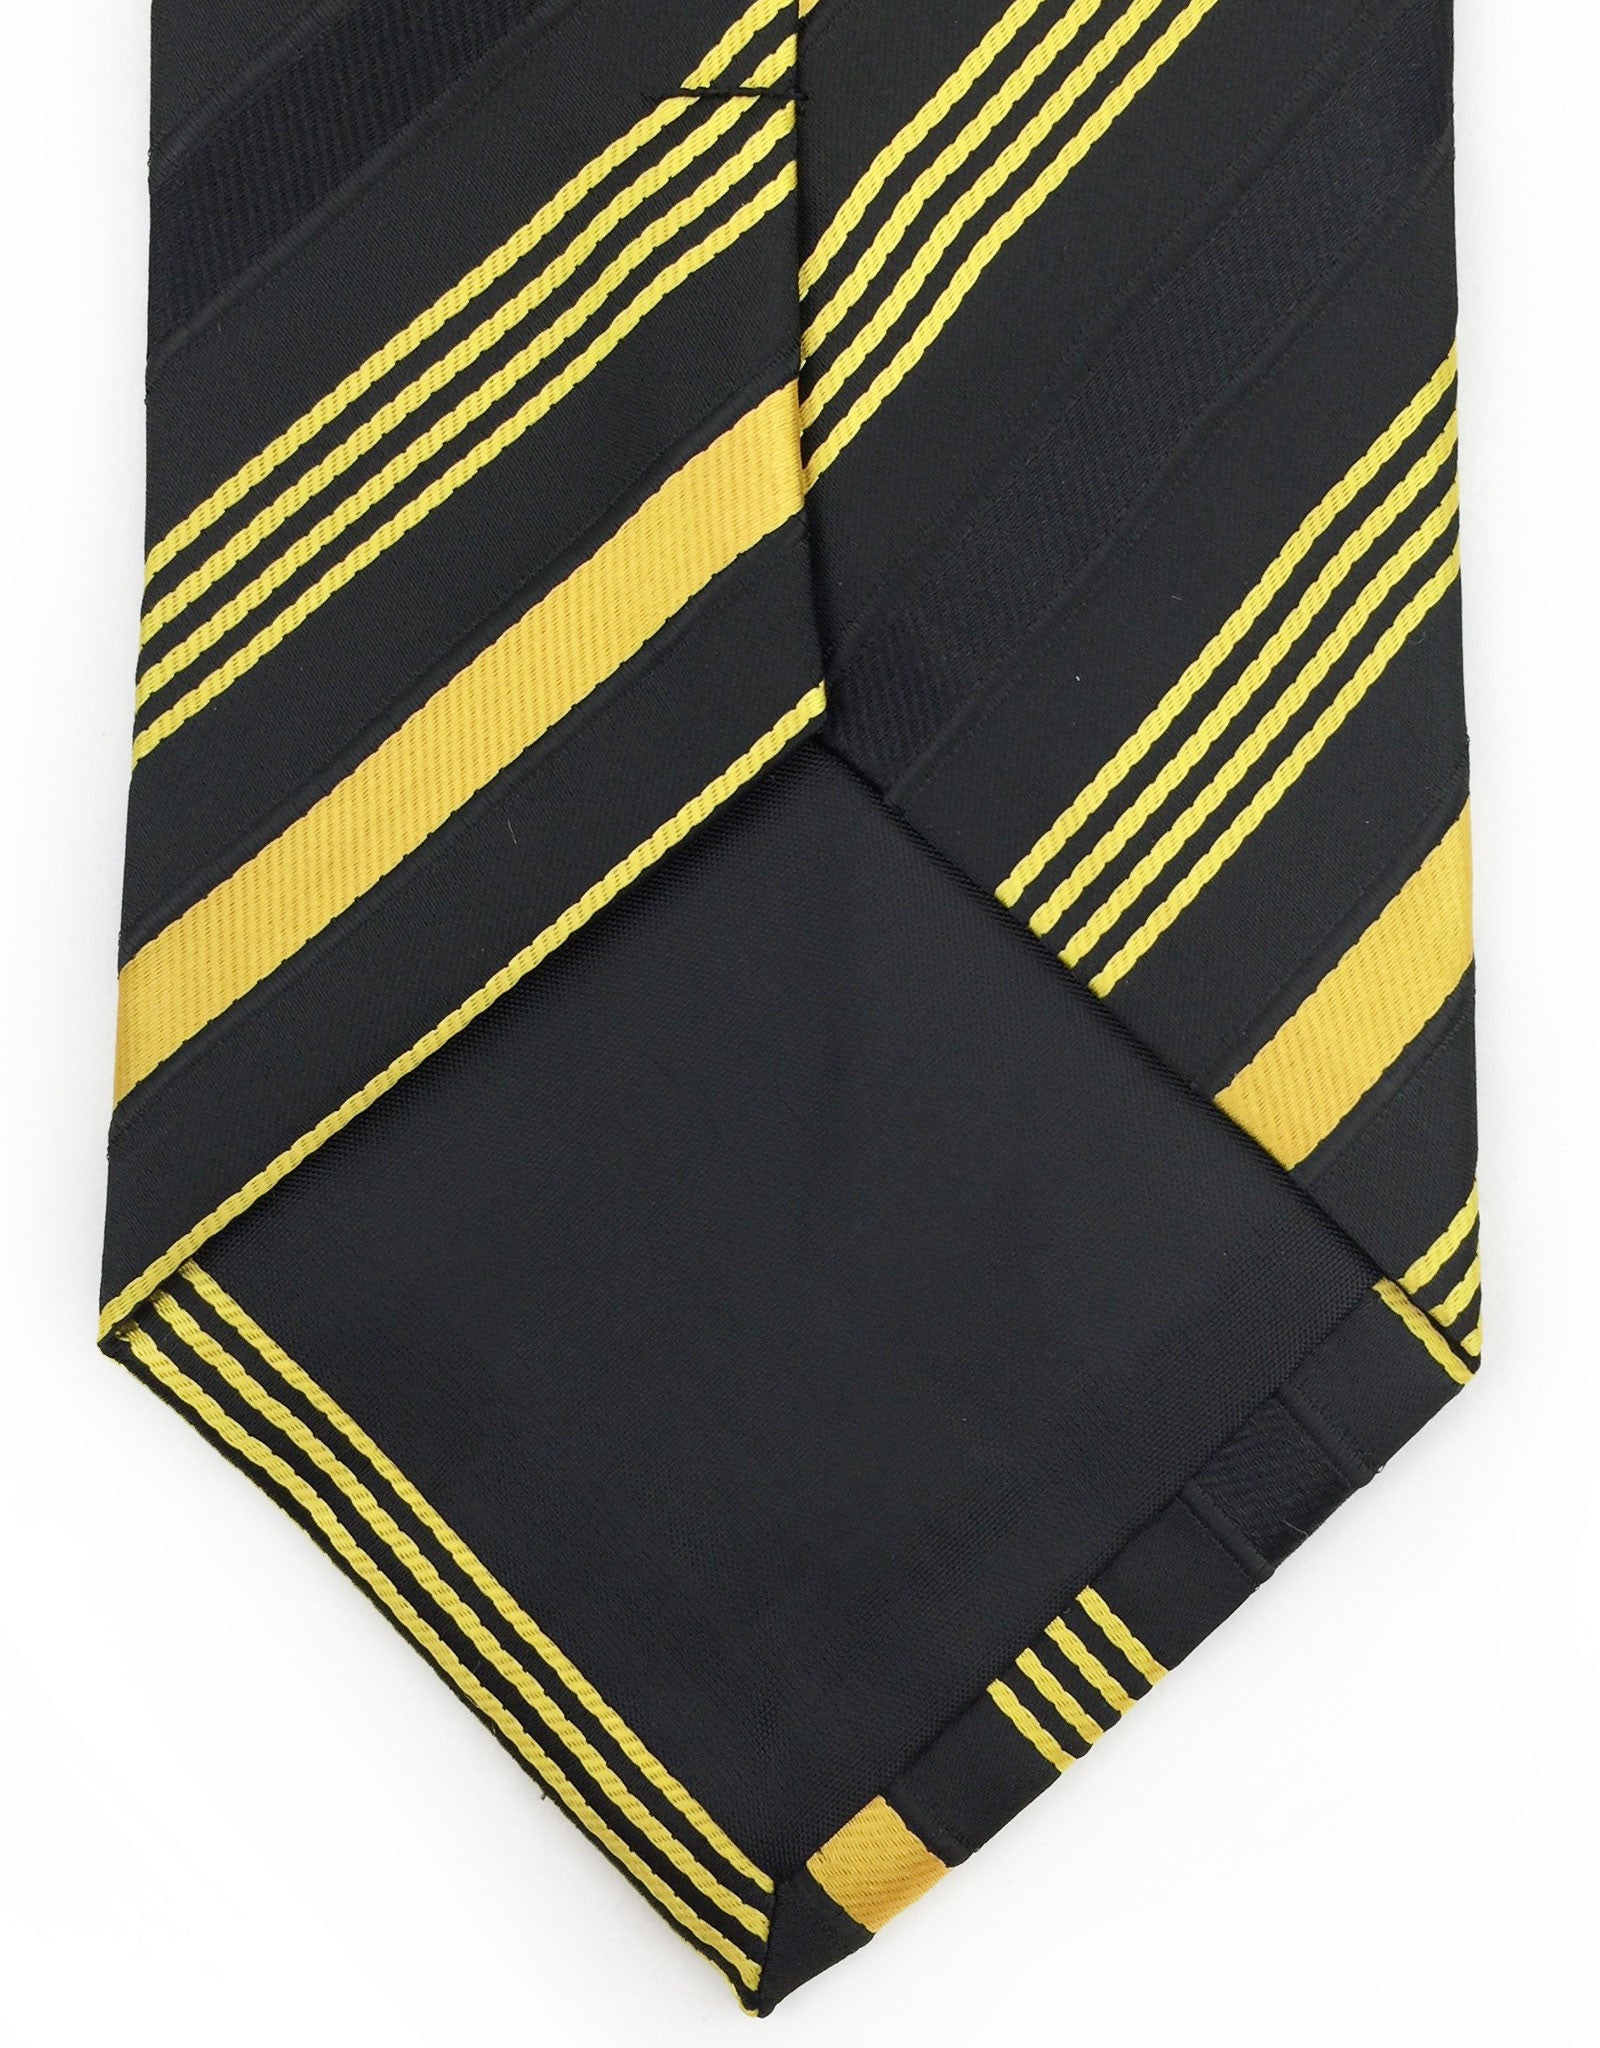 Black and Yellow Gold Striped Necktie – GentlemanJoe